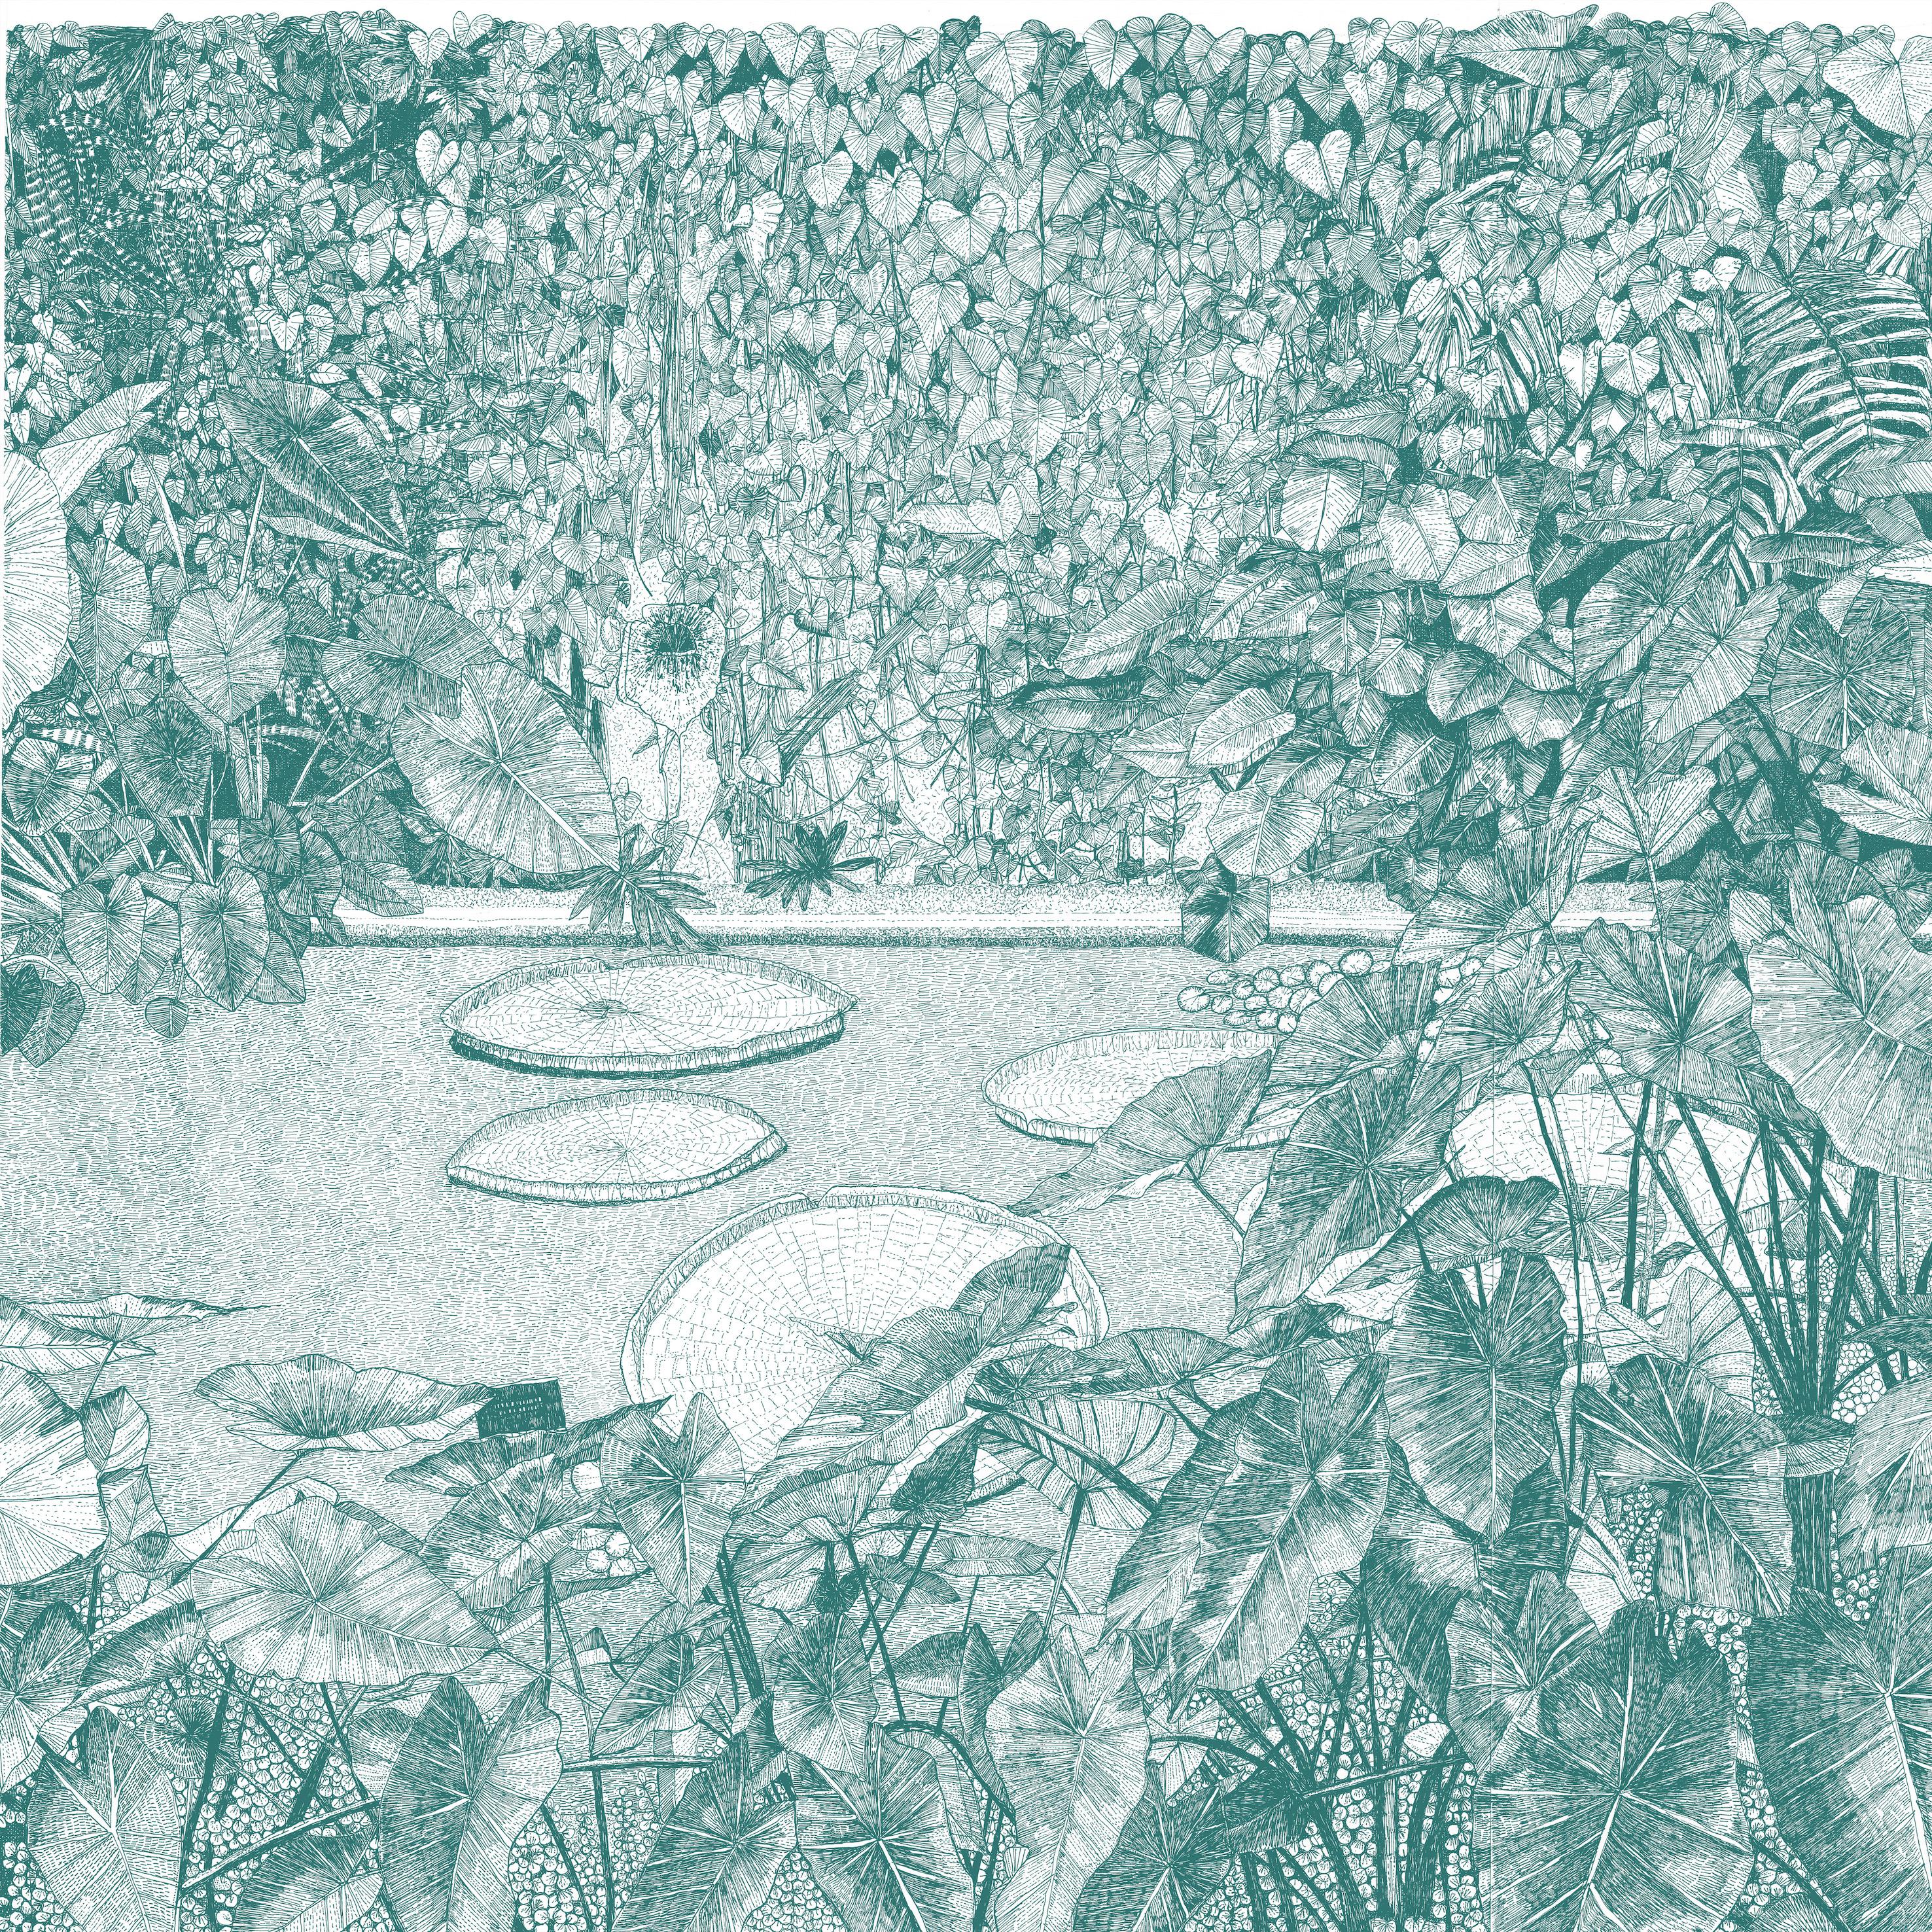 Greenhouse - Waterlily, large